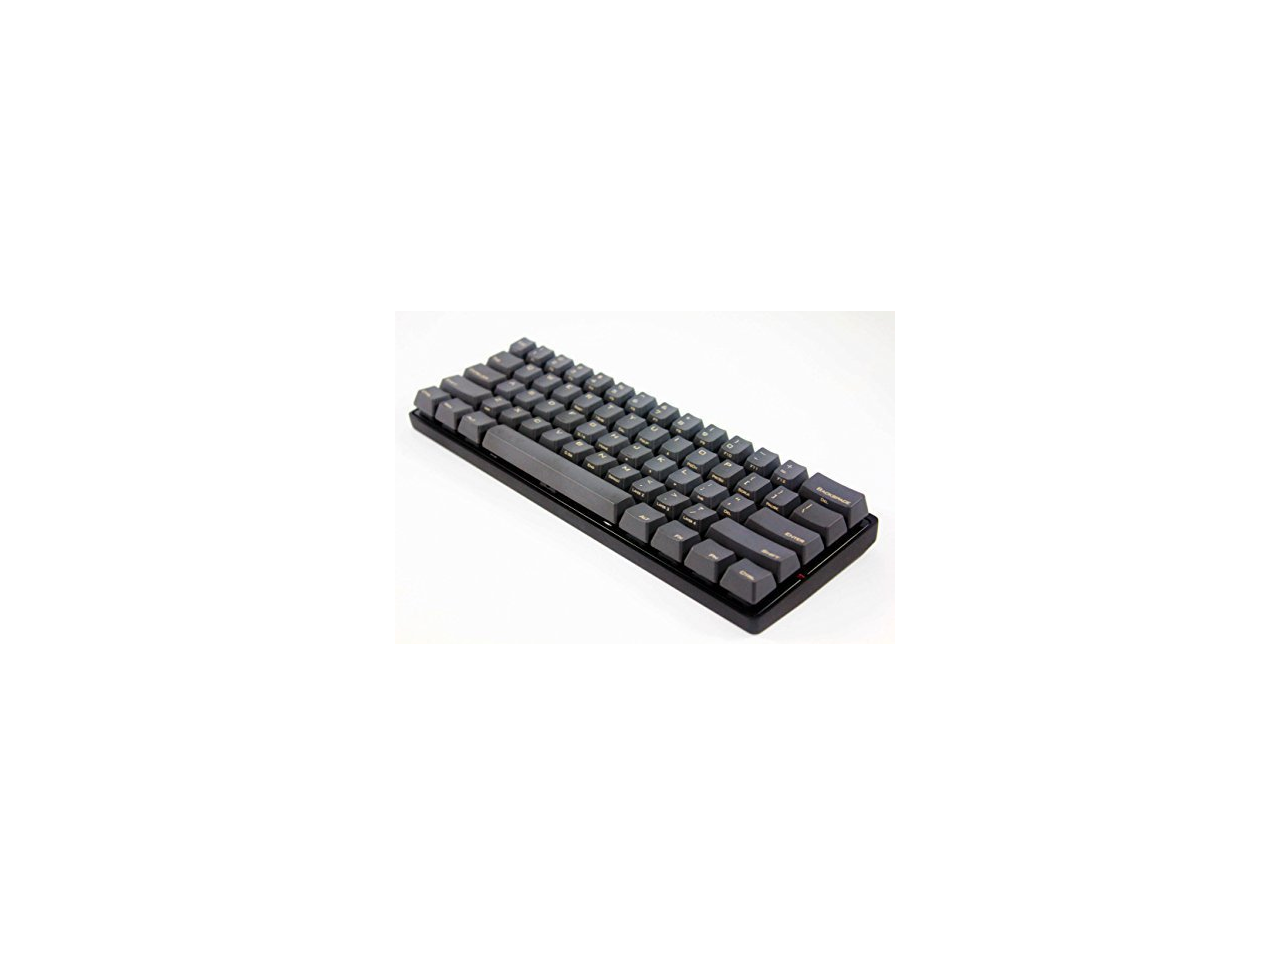 Mechanical Gaming Keyboard Kbc Poker 3 Pok3r Black Case Pbt Laser Etched Keycaps Cherry Mx Switches Programmable Metal Casing Mx Blue Black Newegg Com